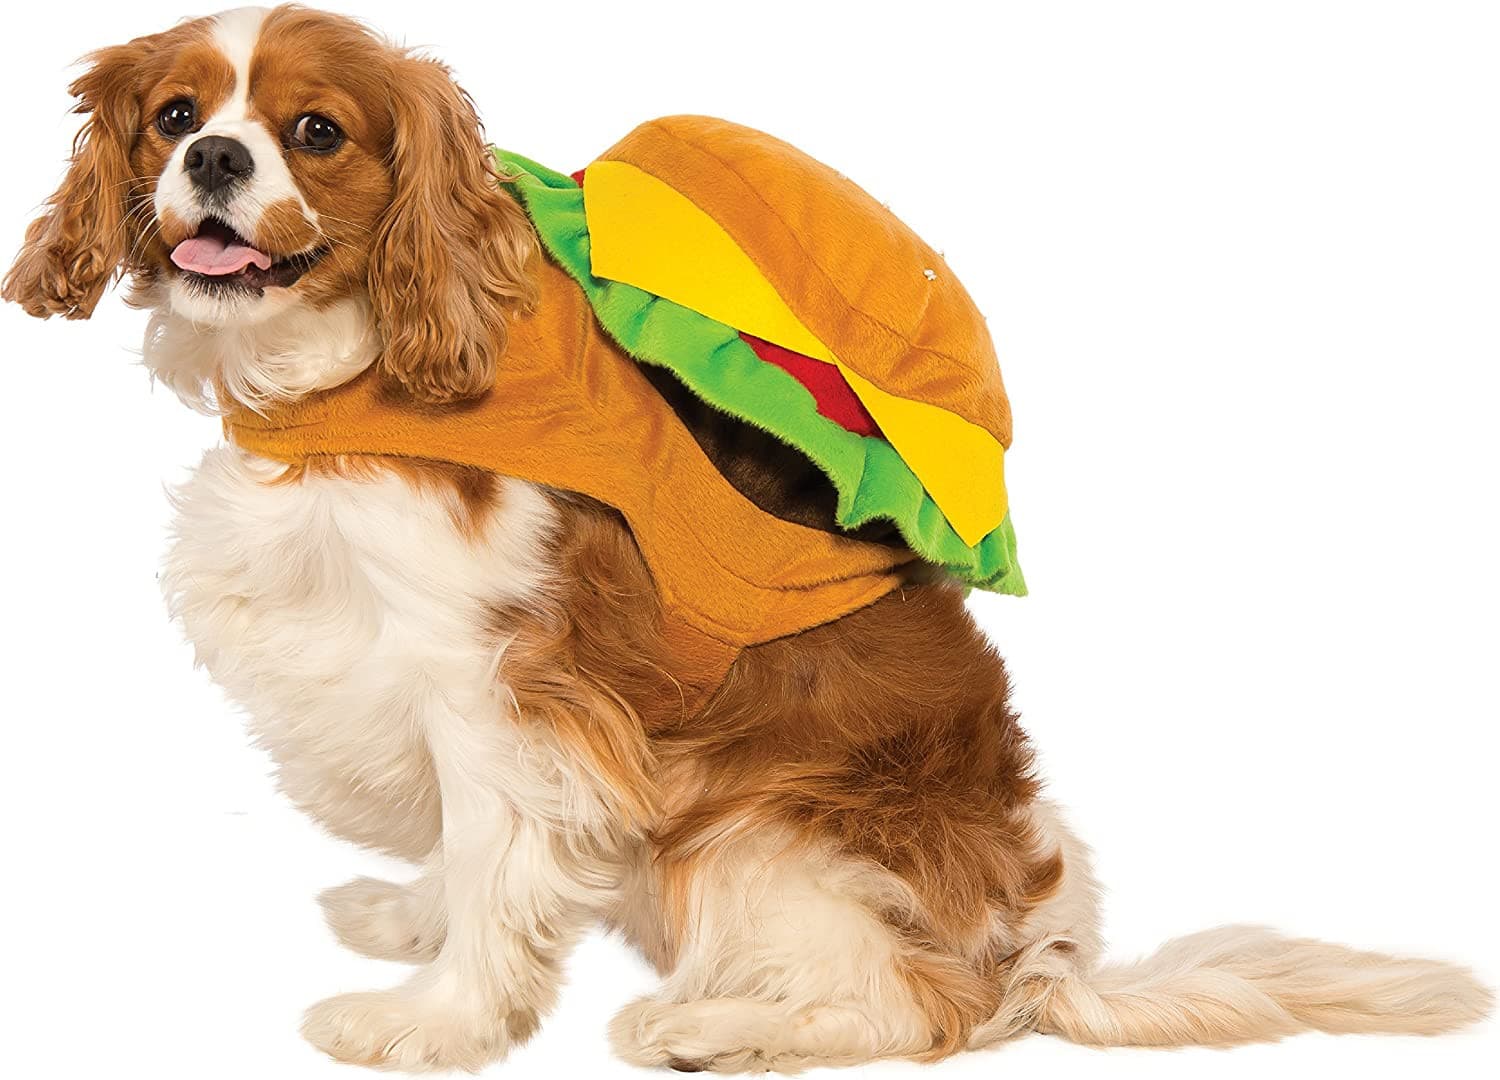 Cheeseburger Pet Costume.